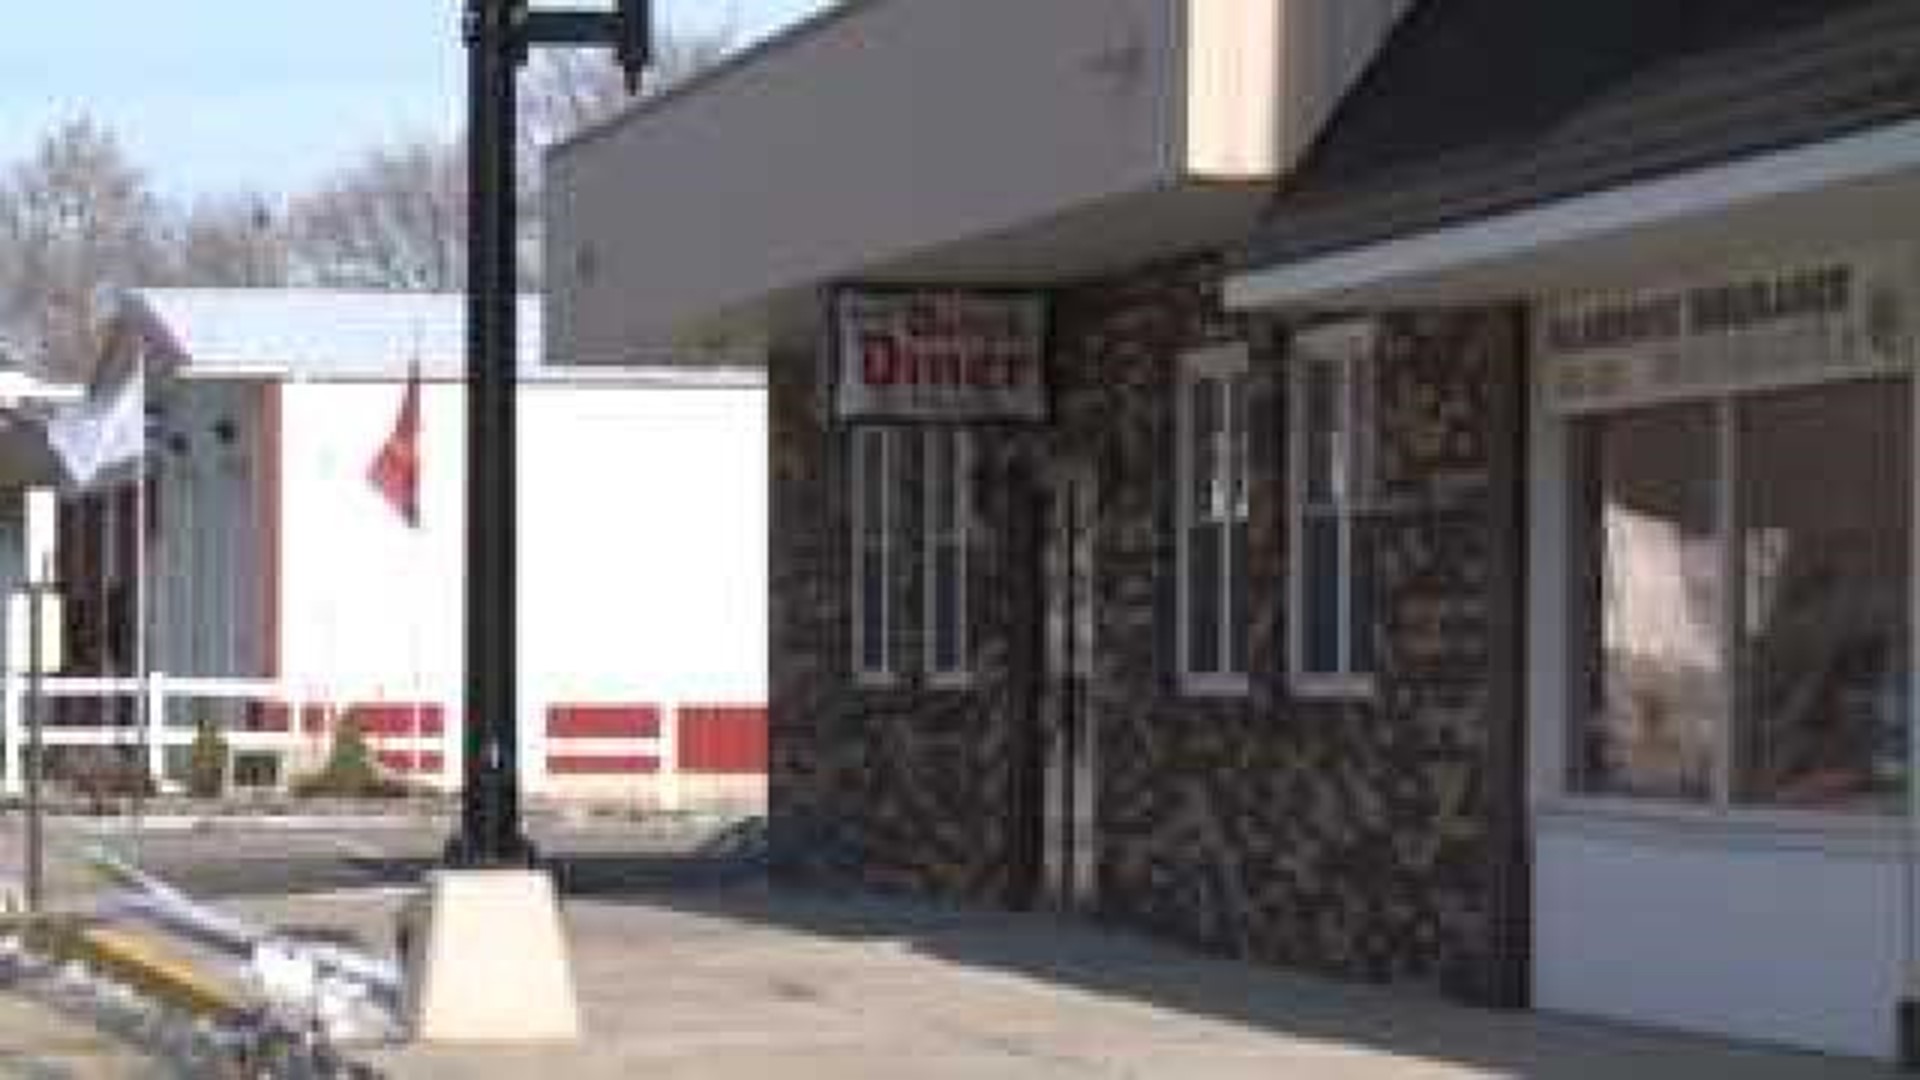 Historic Tampico diner closes its doors